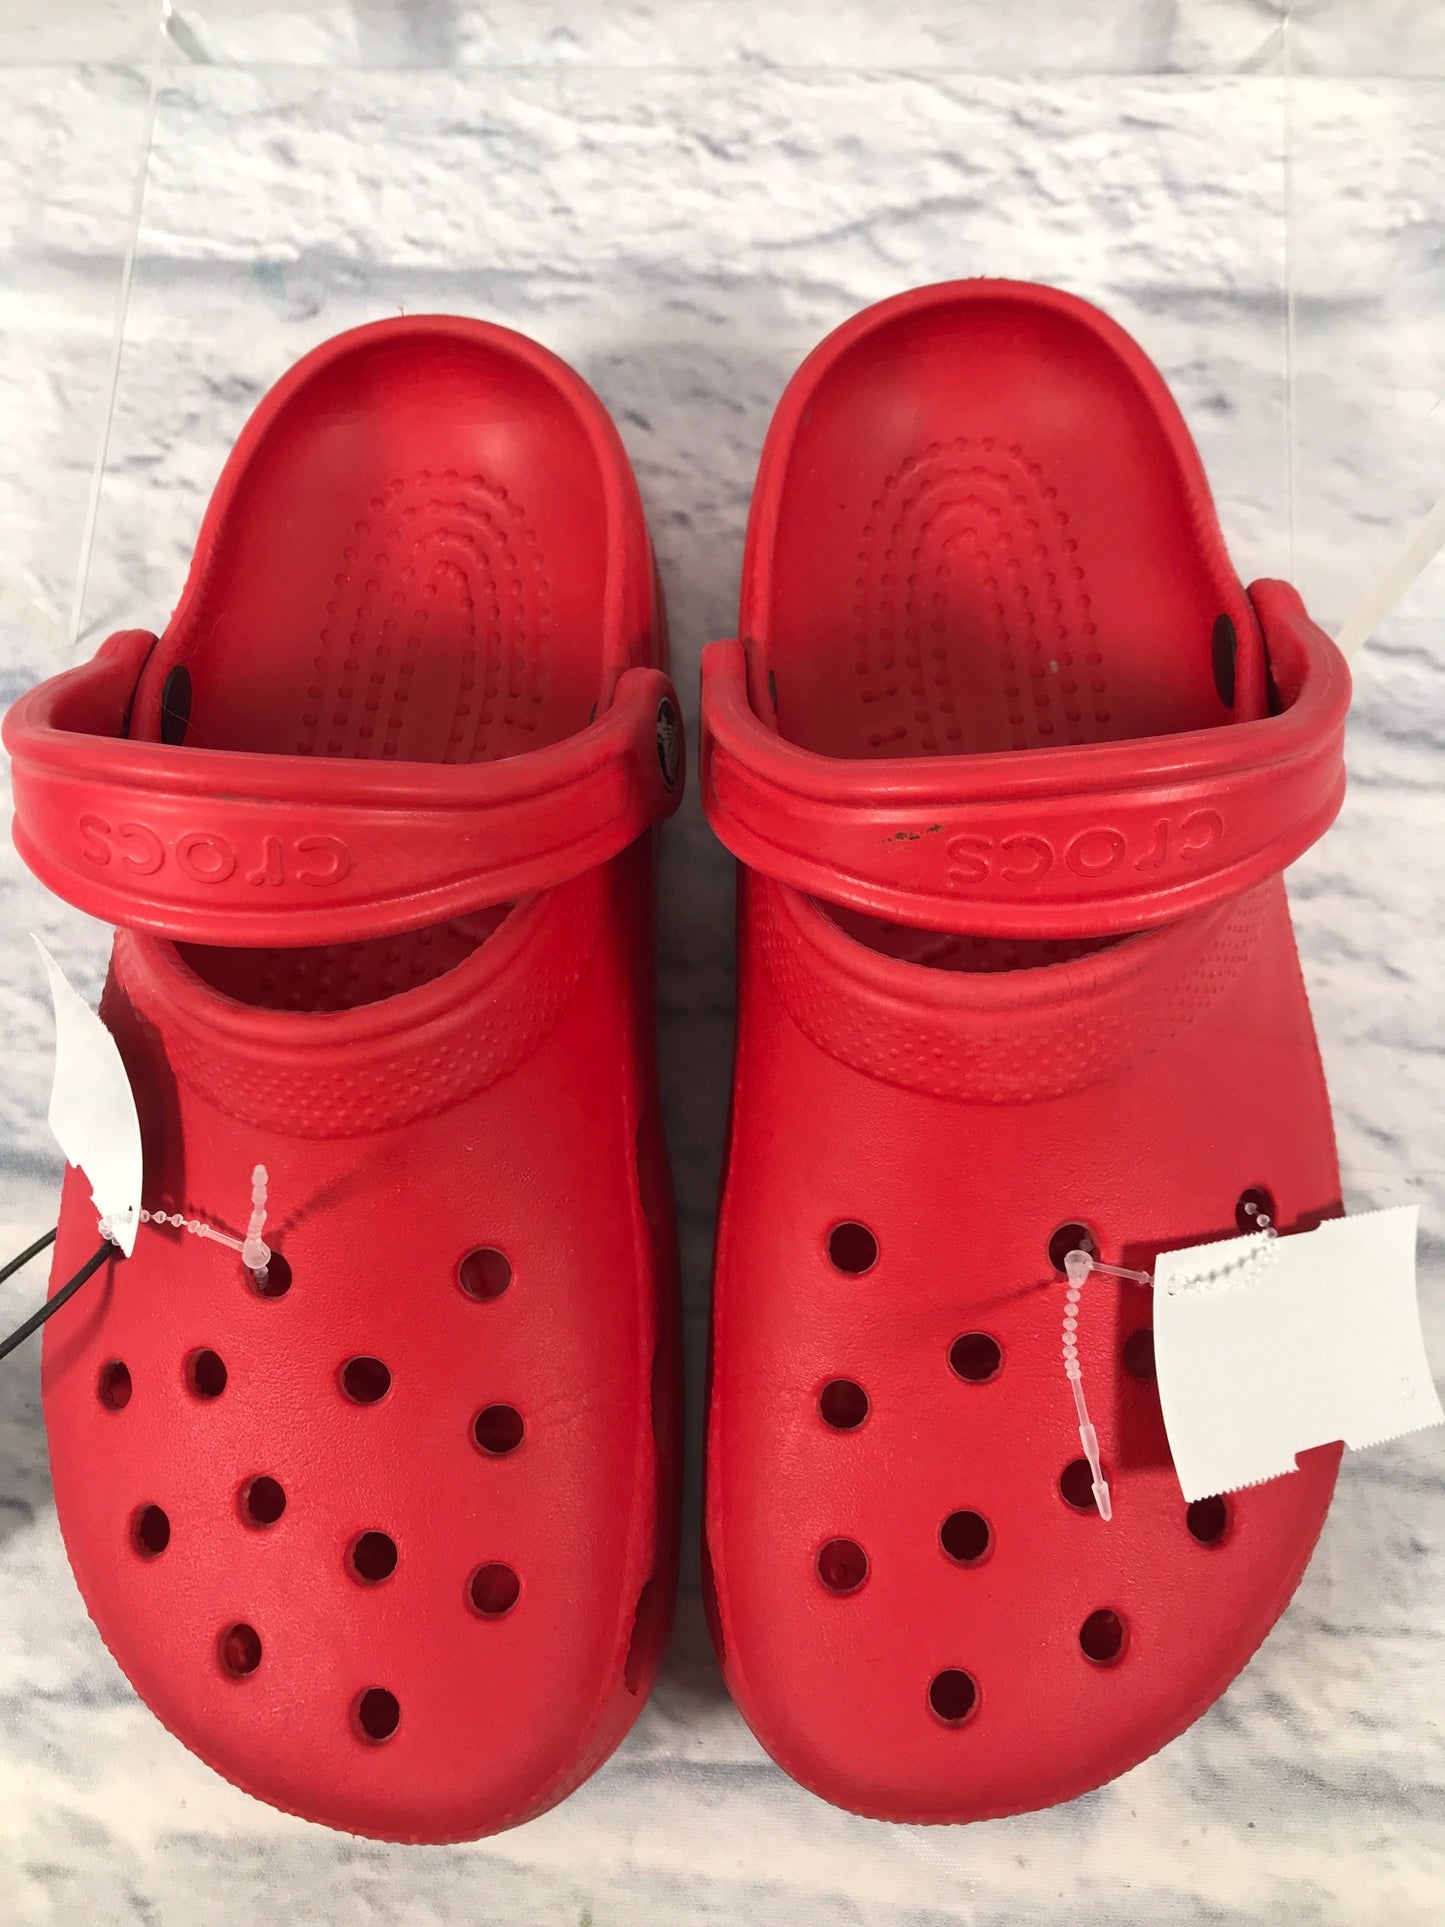 Red Shoes Flats Crocs, Size 7